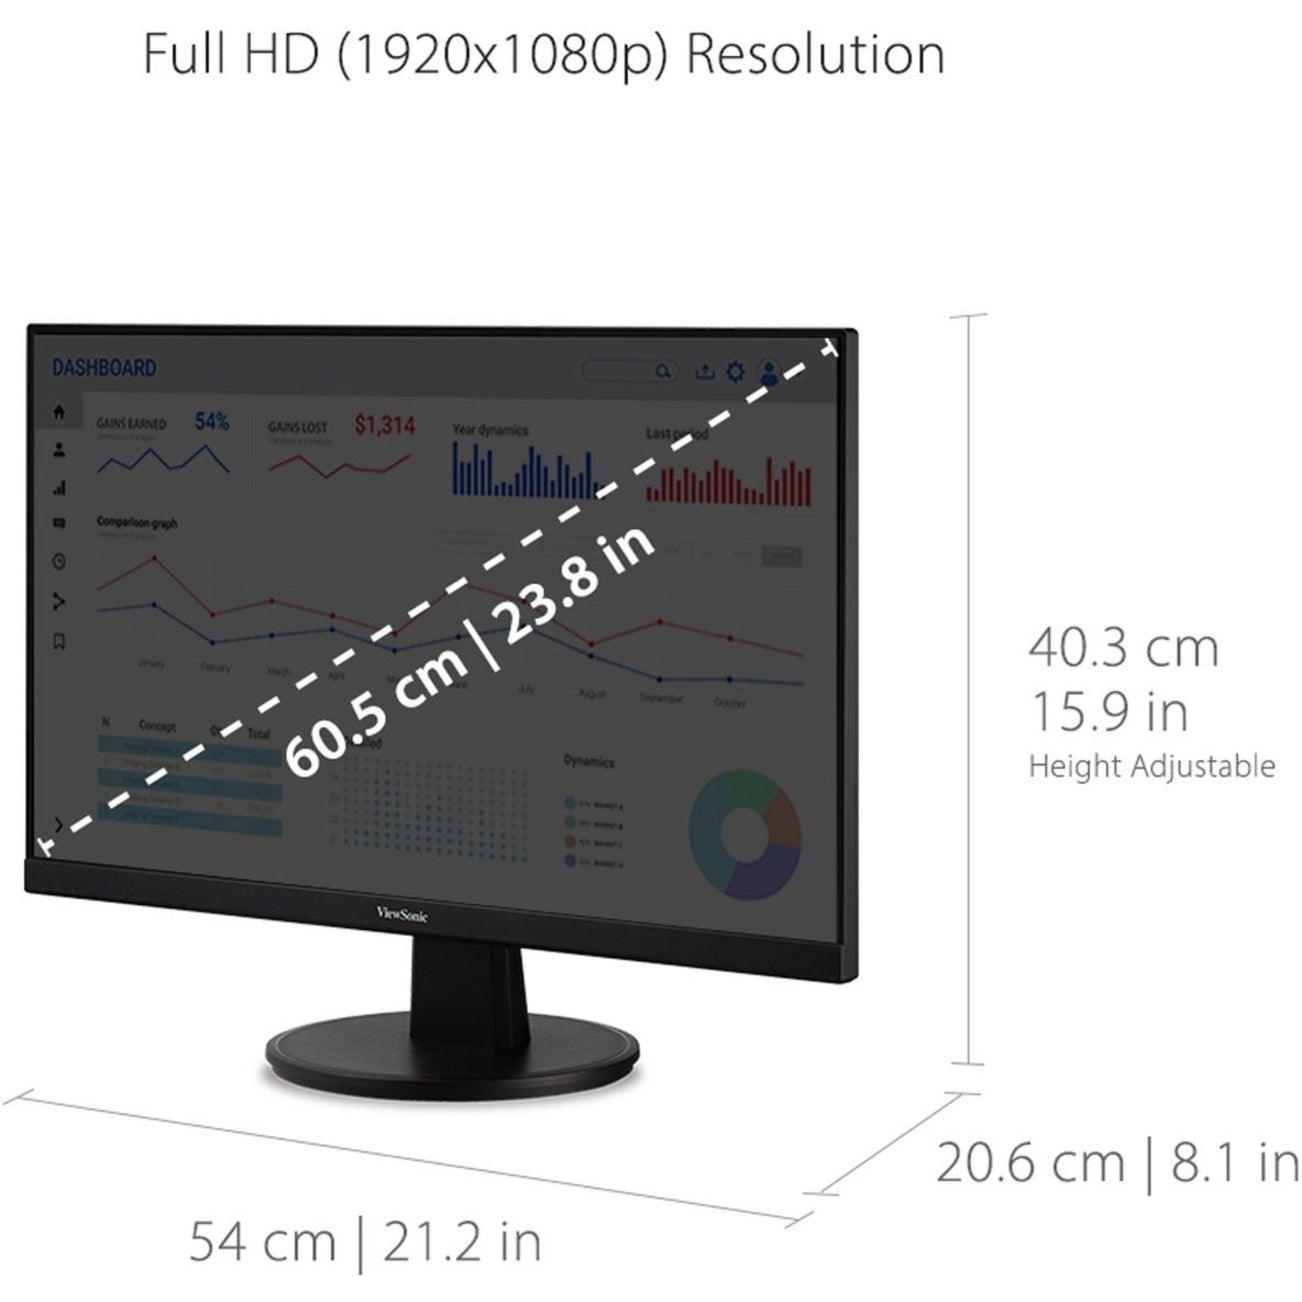 ViewSonic VA2447-MH 24" MVA Monitor with HDMI and VGA, Full HD, 1920 x 1080 Resolution